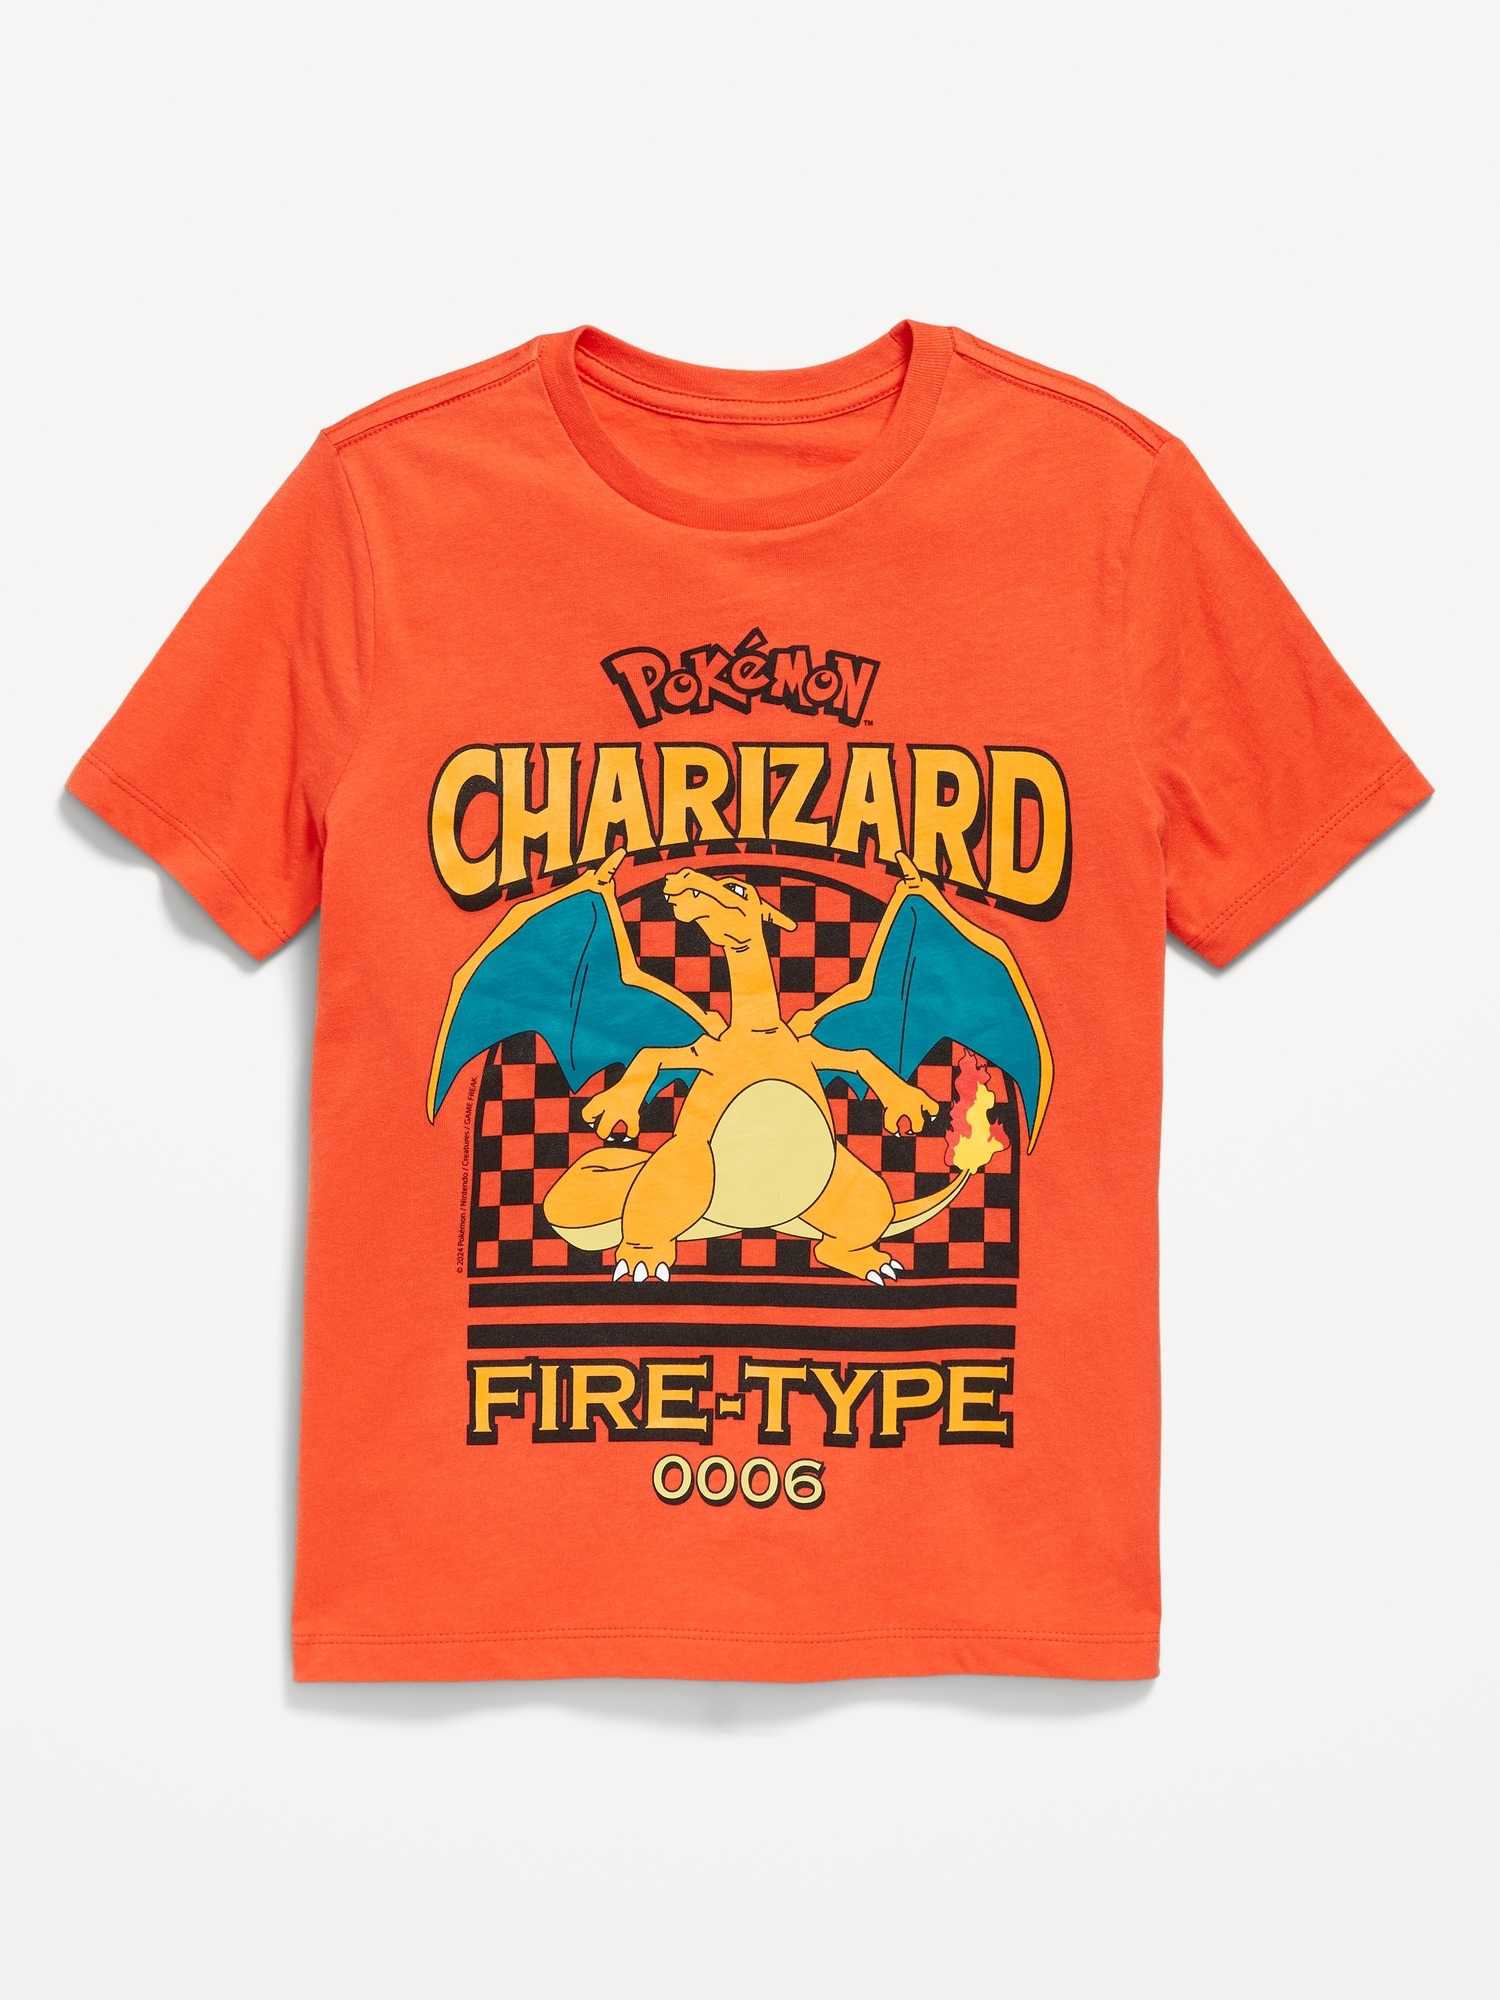 Pokémon™ Gender-Neutral Graphic T-Shirt for Kids